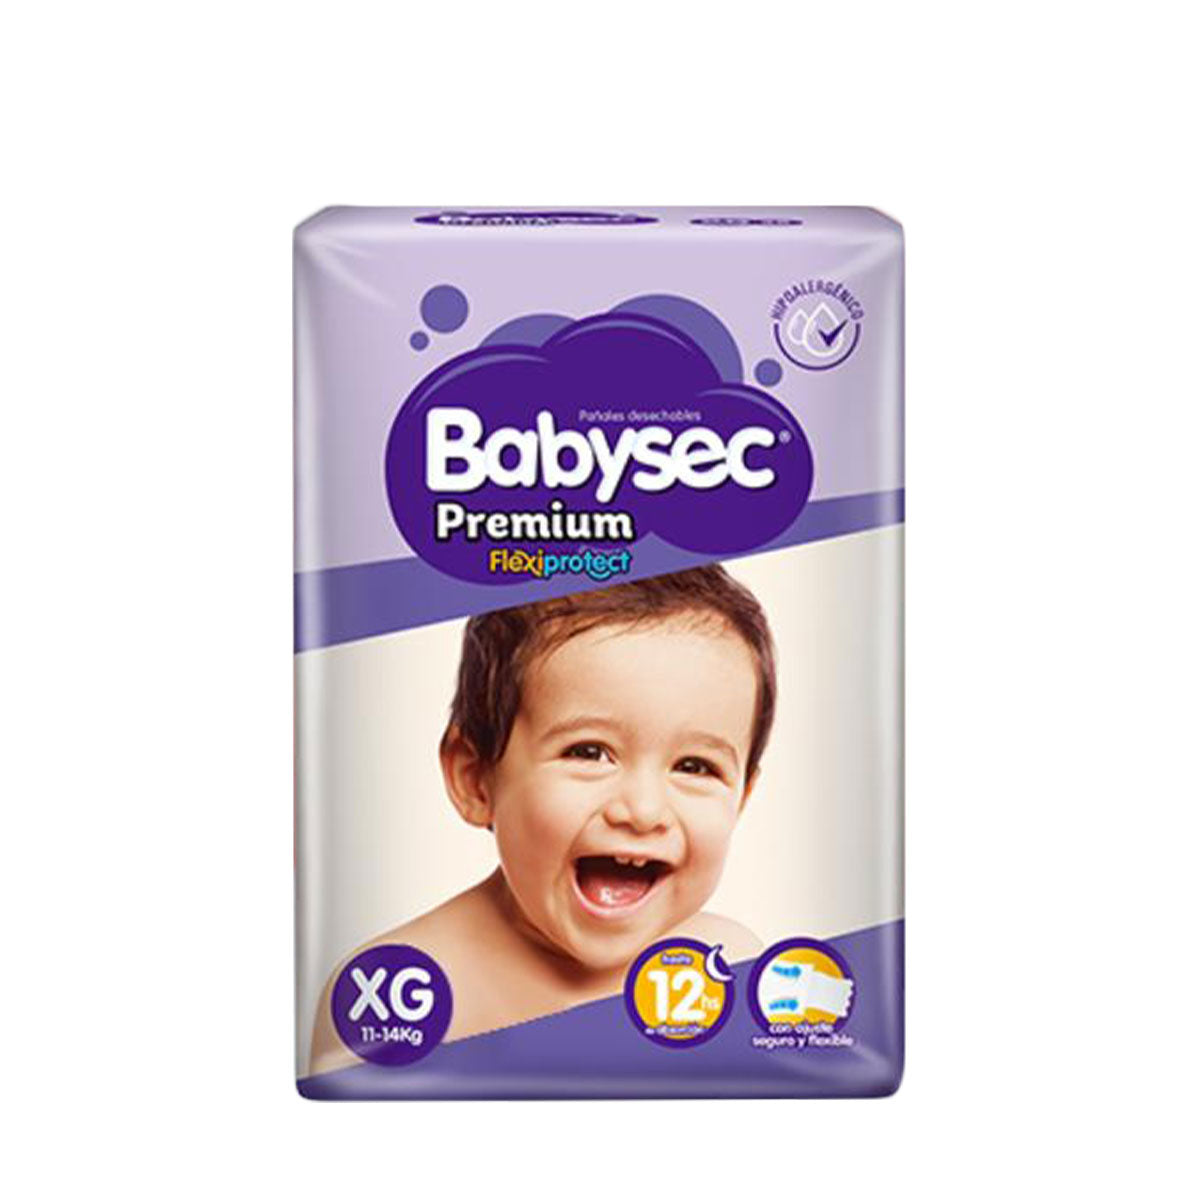 Pañales Babysec Premium XG (112 unidades)